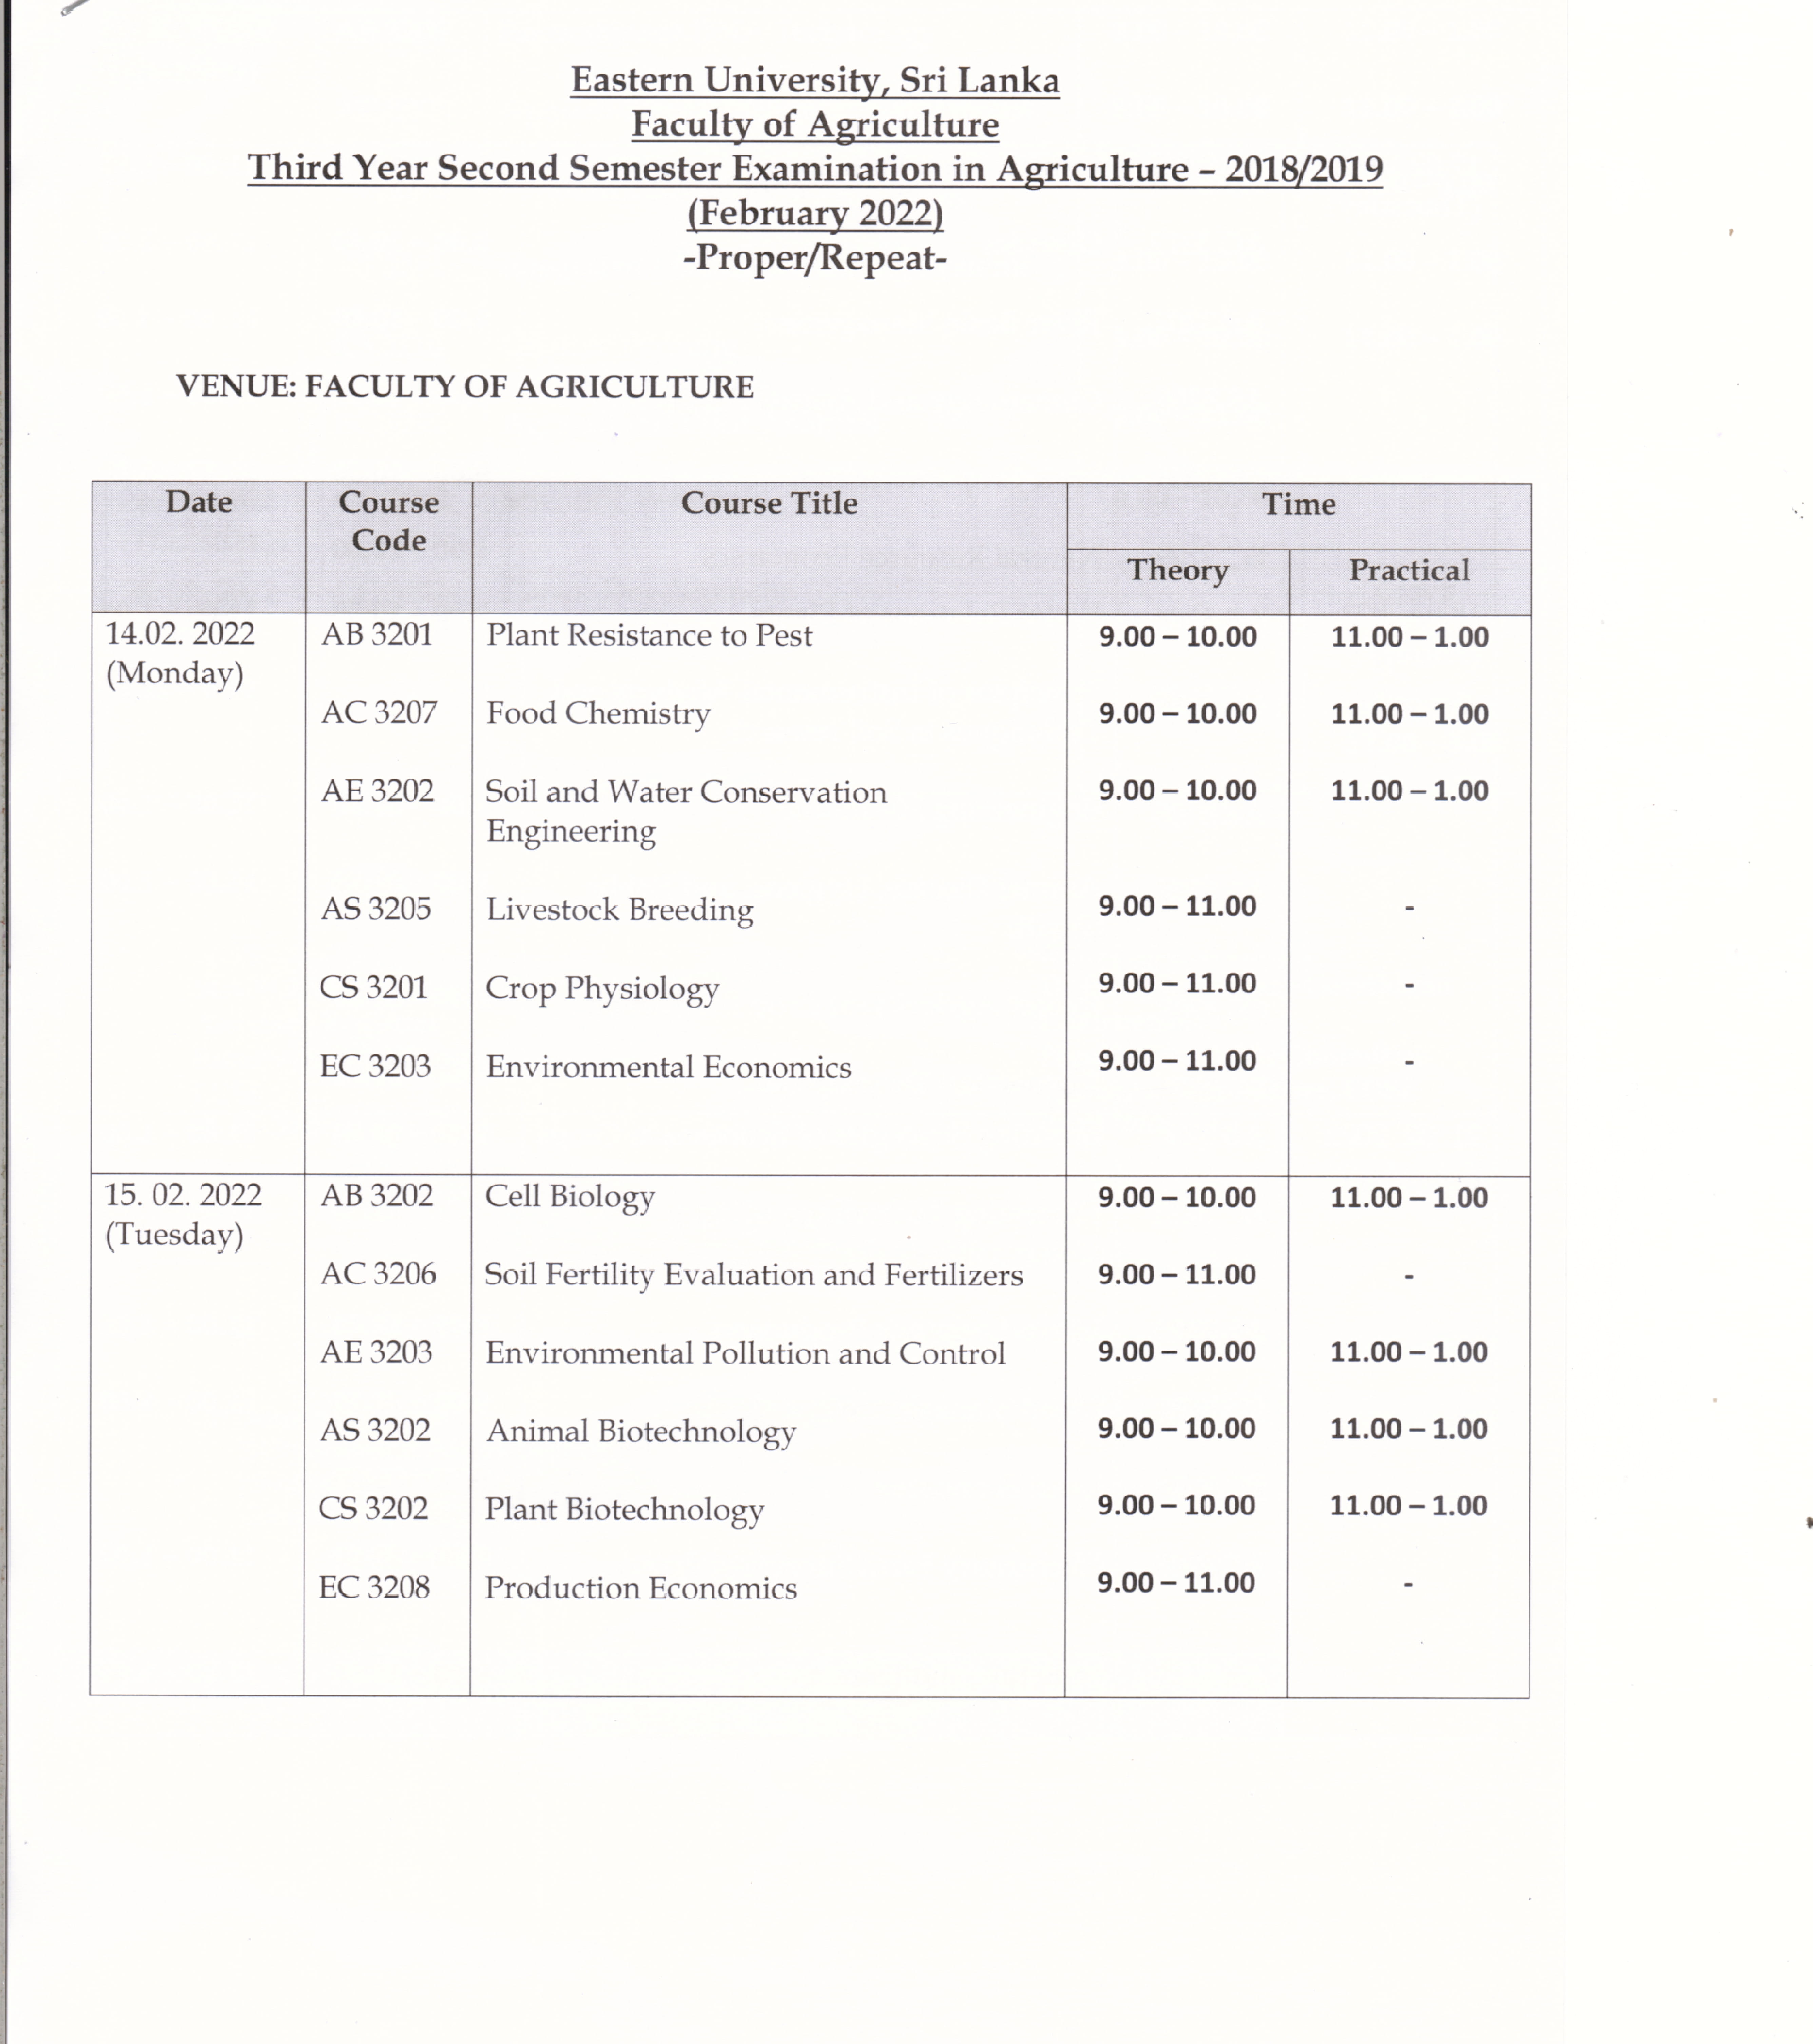 Third Year Second Semester Examination Timetable-1.jpg